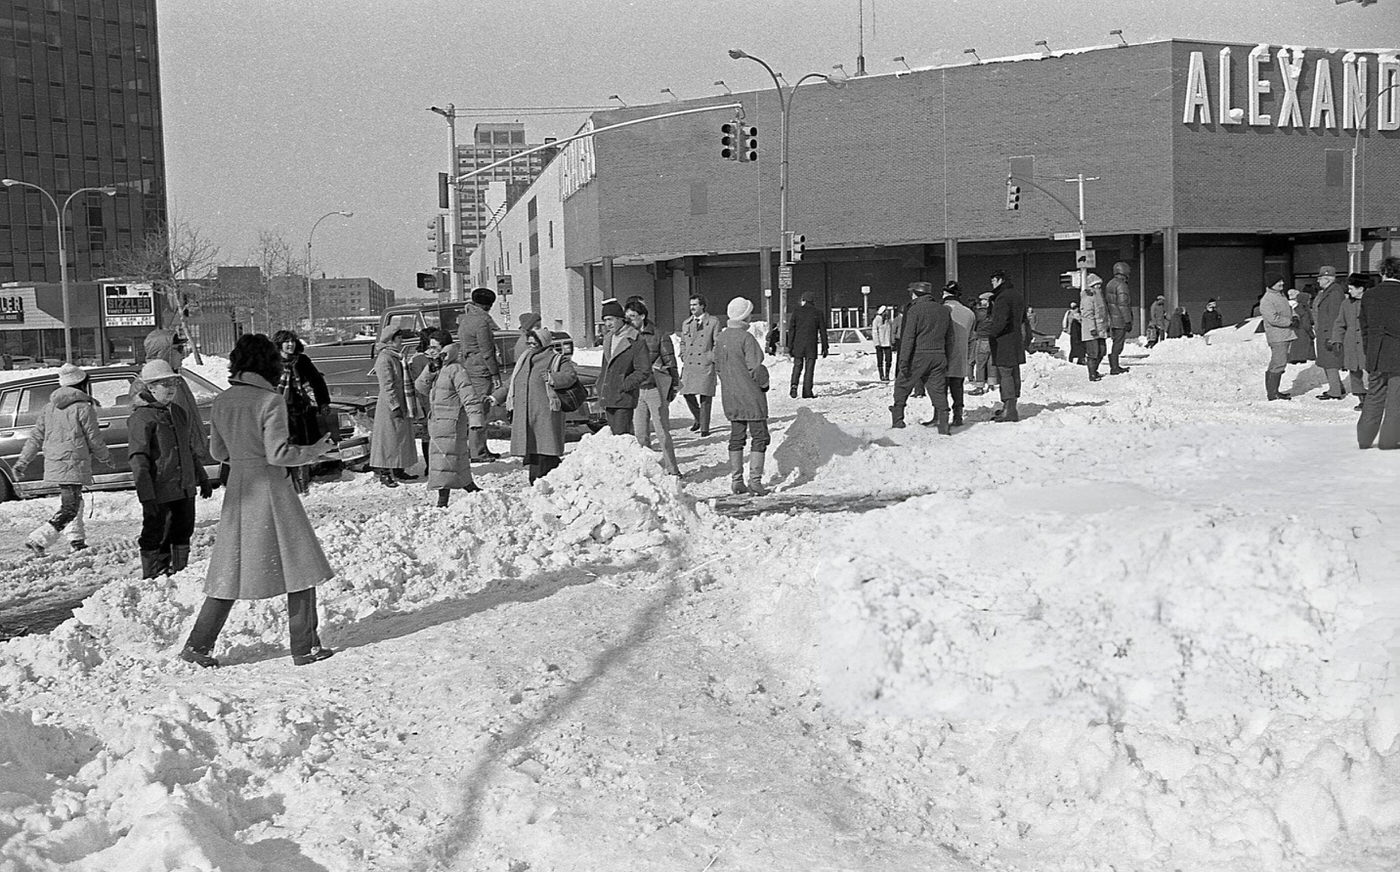 Pedestrians Walk Through Snow In The Aftermath Of A Blizzard, Rego Park, Queens, 1983.